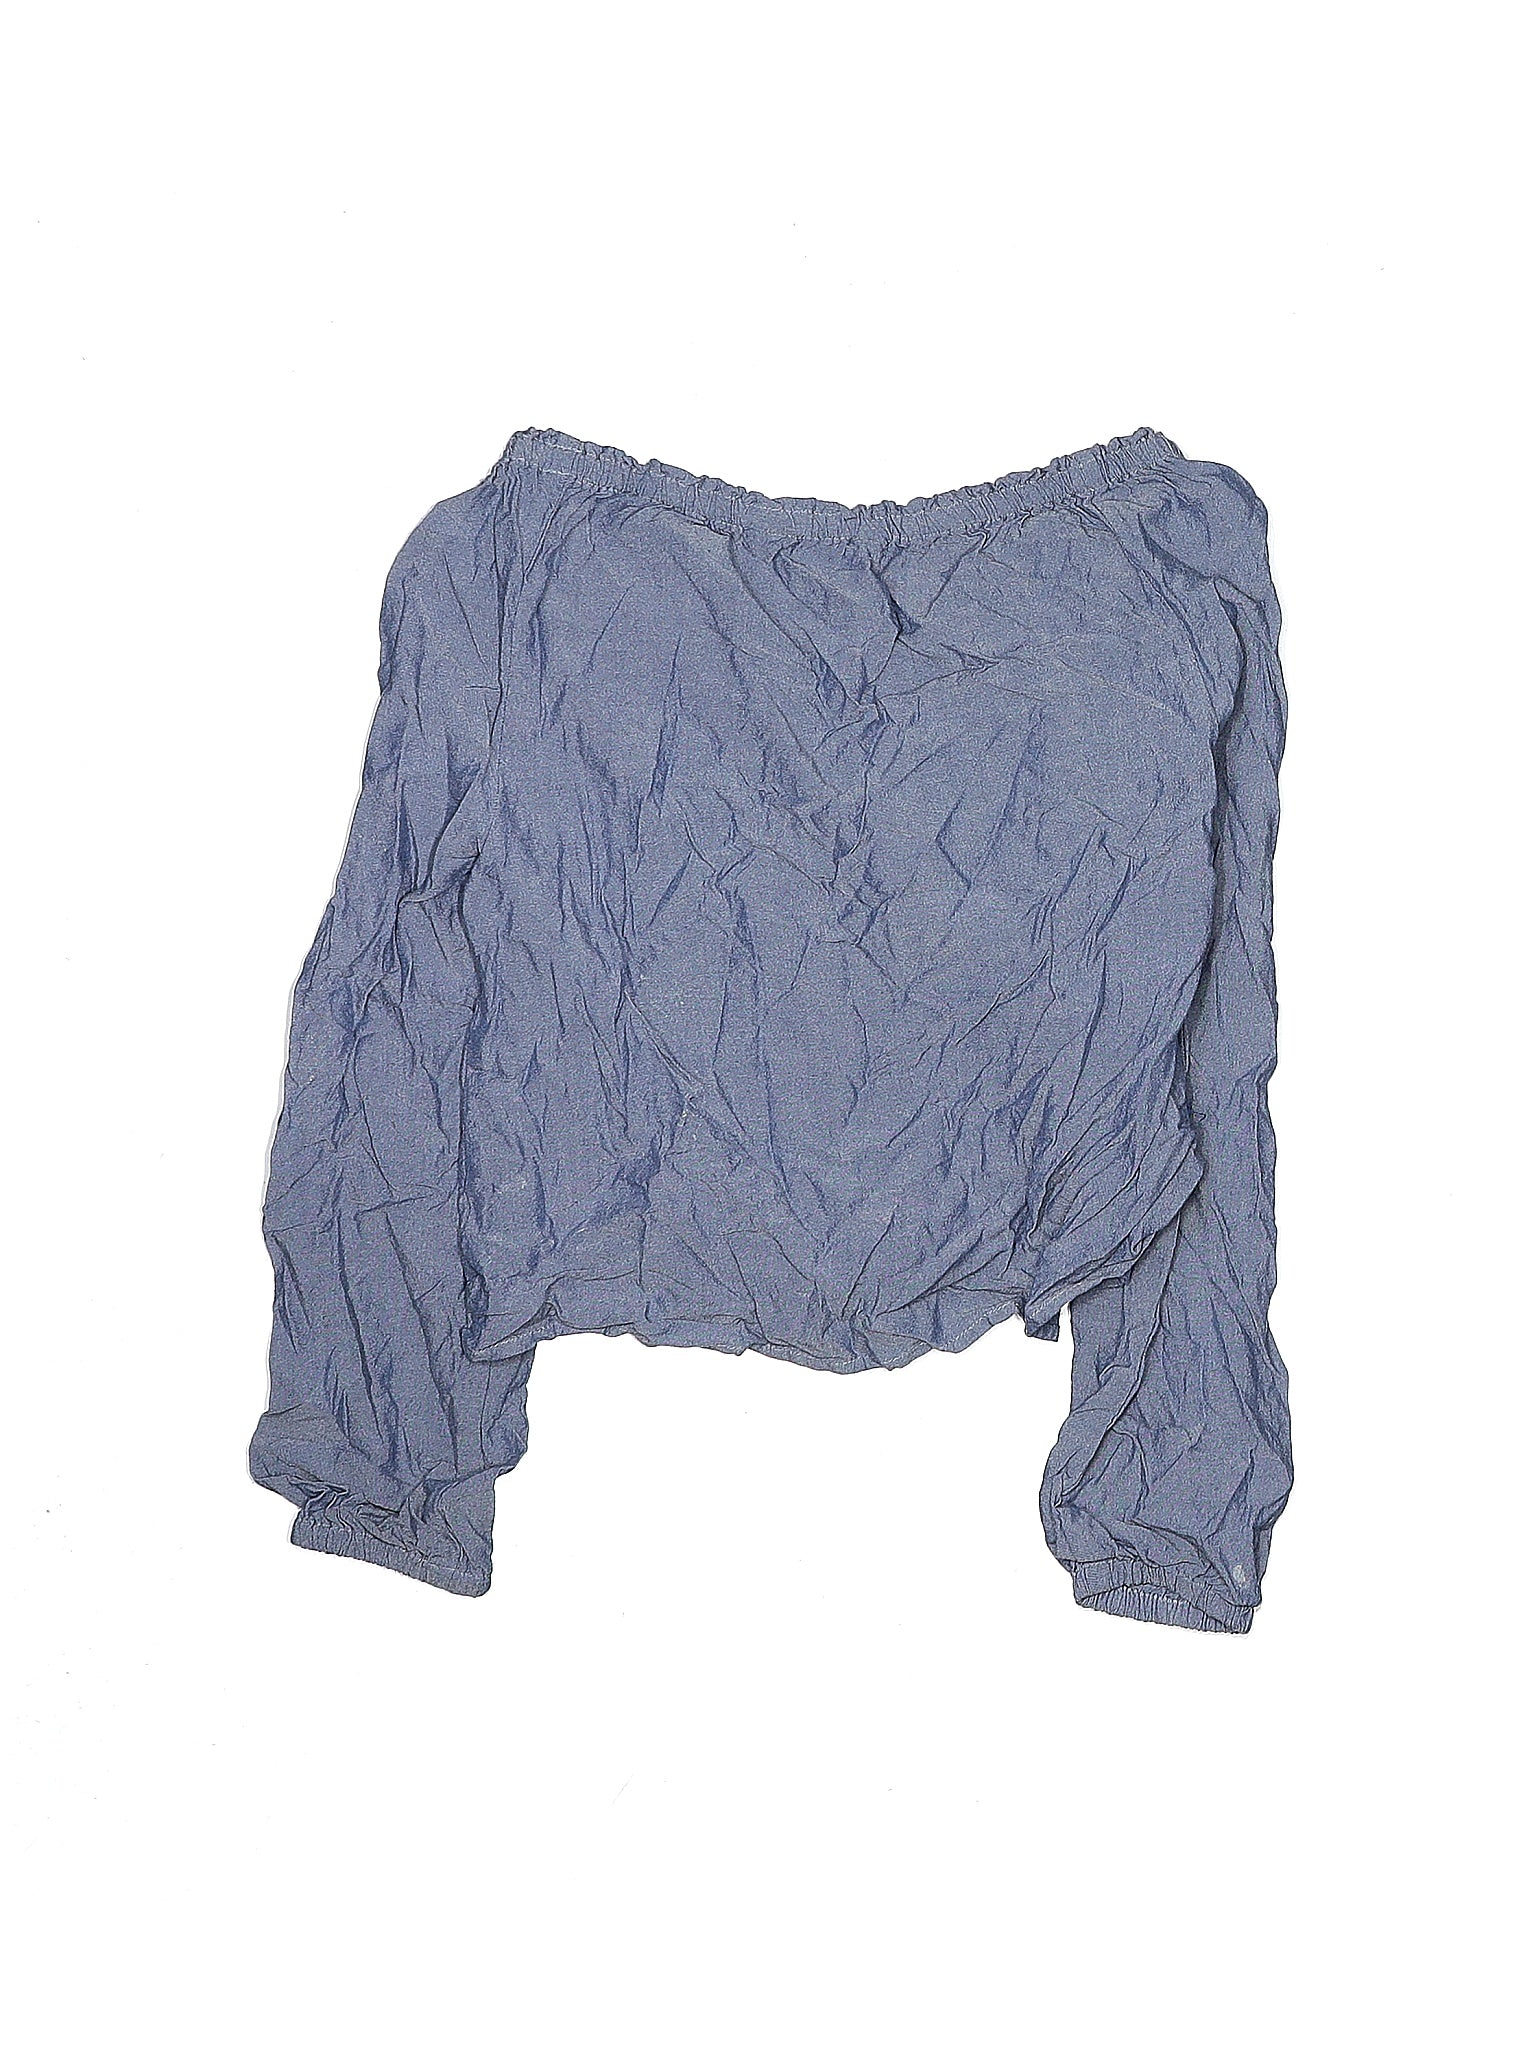 Long Sleeve Blouse size - 11 - 12